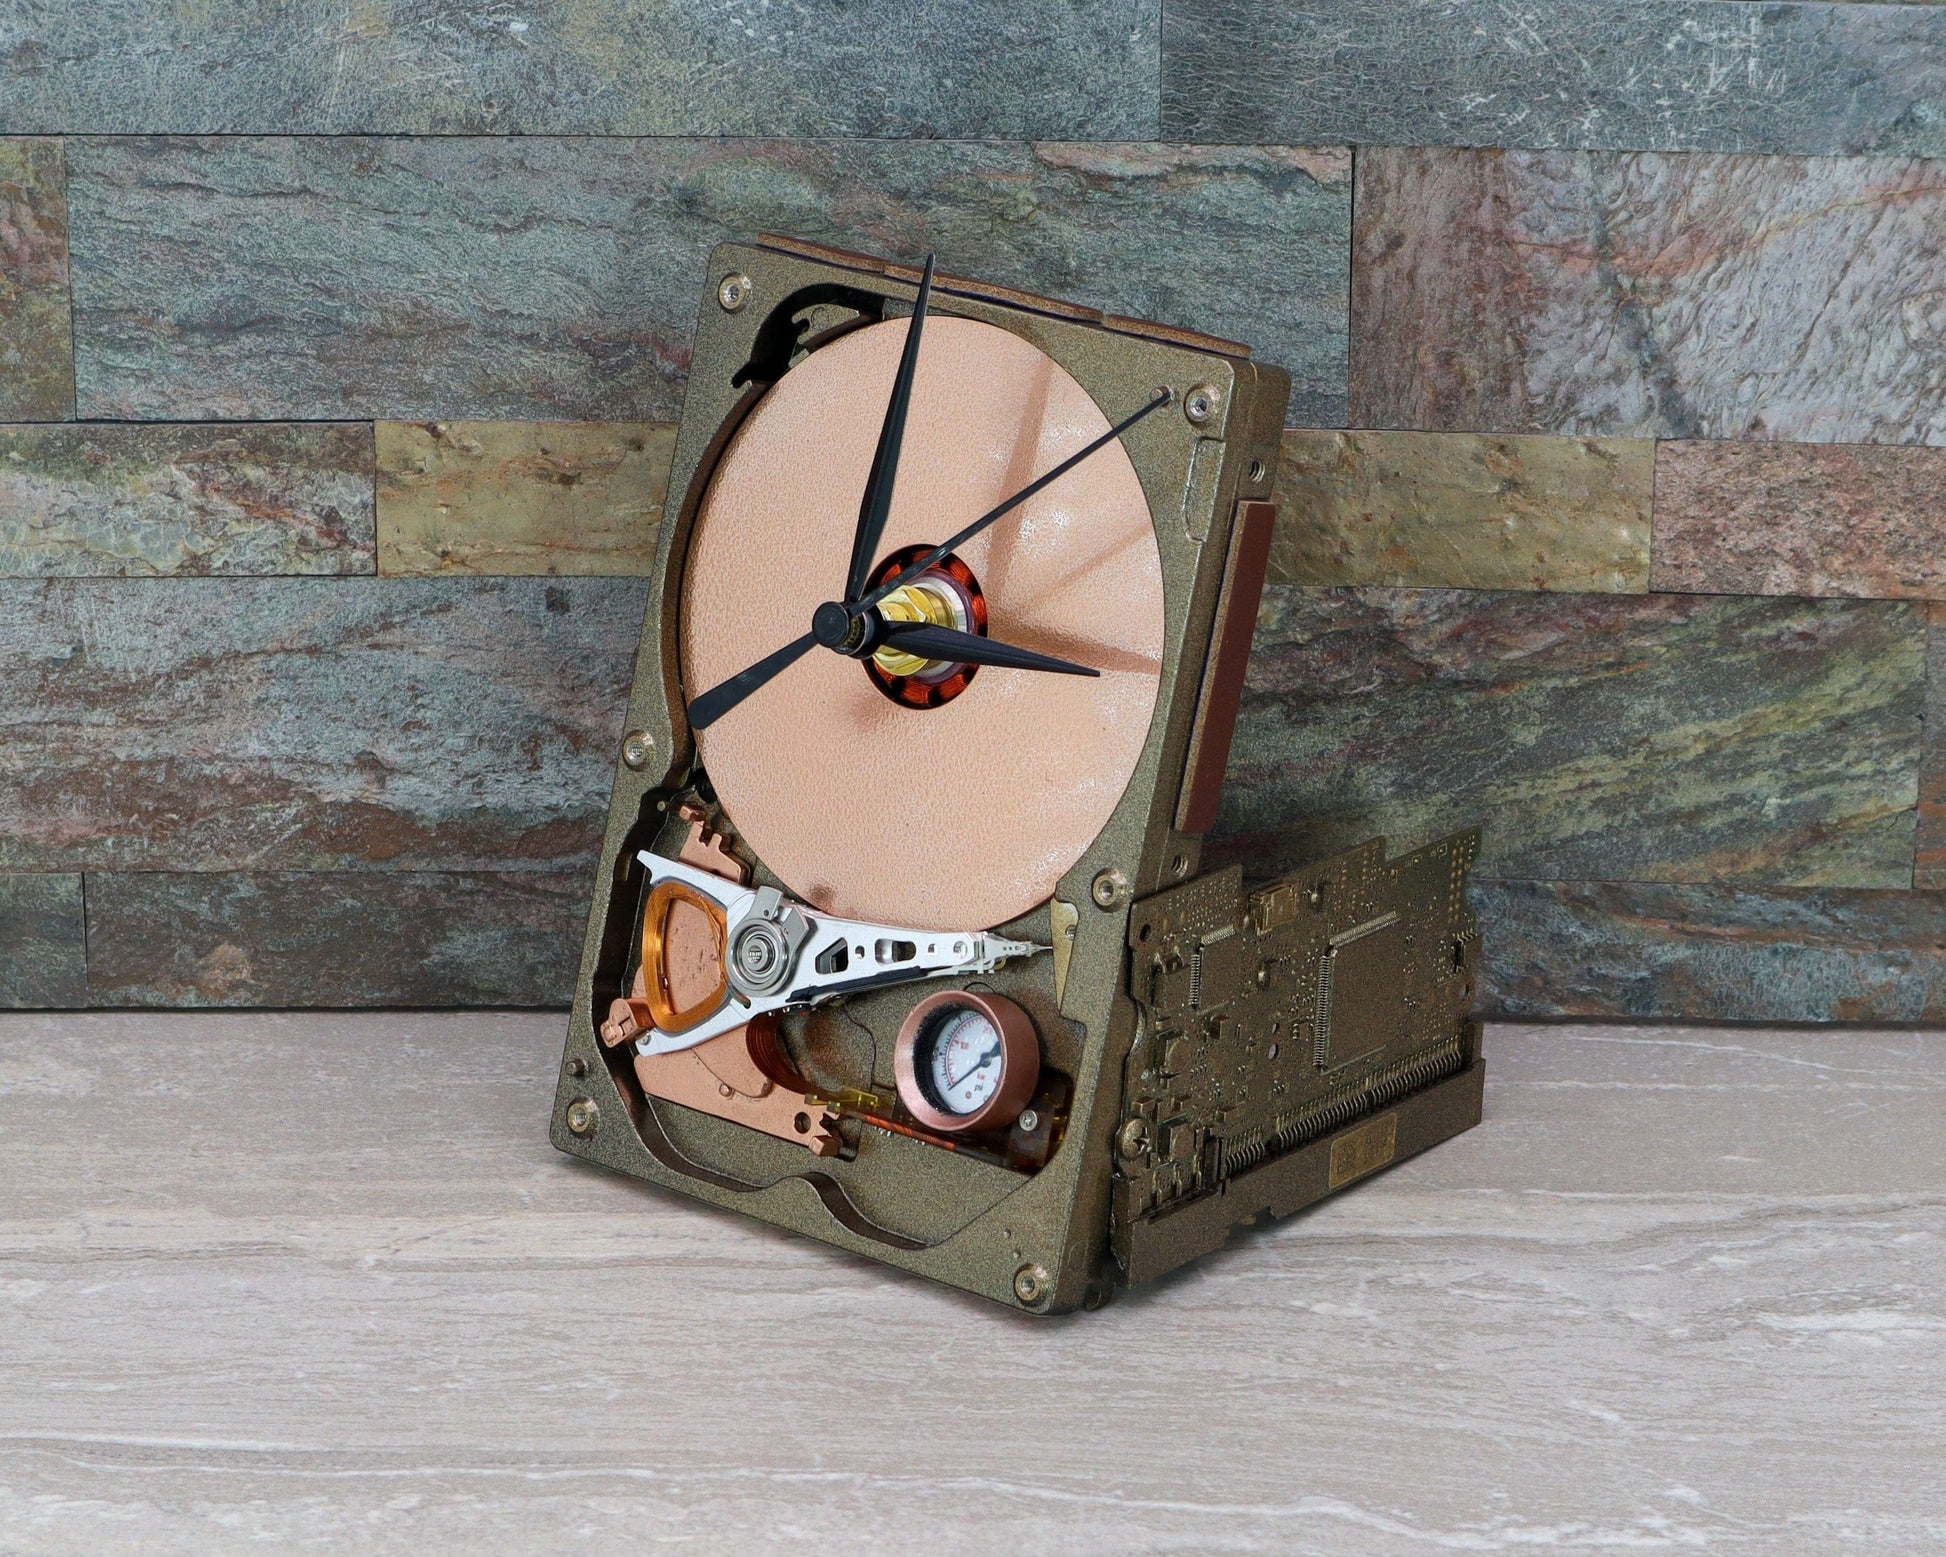 LightAndTimeArt Steampunk Clock Upcycled Steampunk Antikythera Hard Drive Clock - Modern Desk Clock - Gift for geeks, nerds, office, IT - Victorian, industrial design